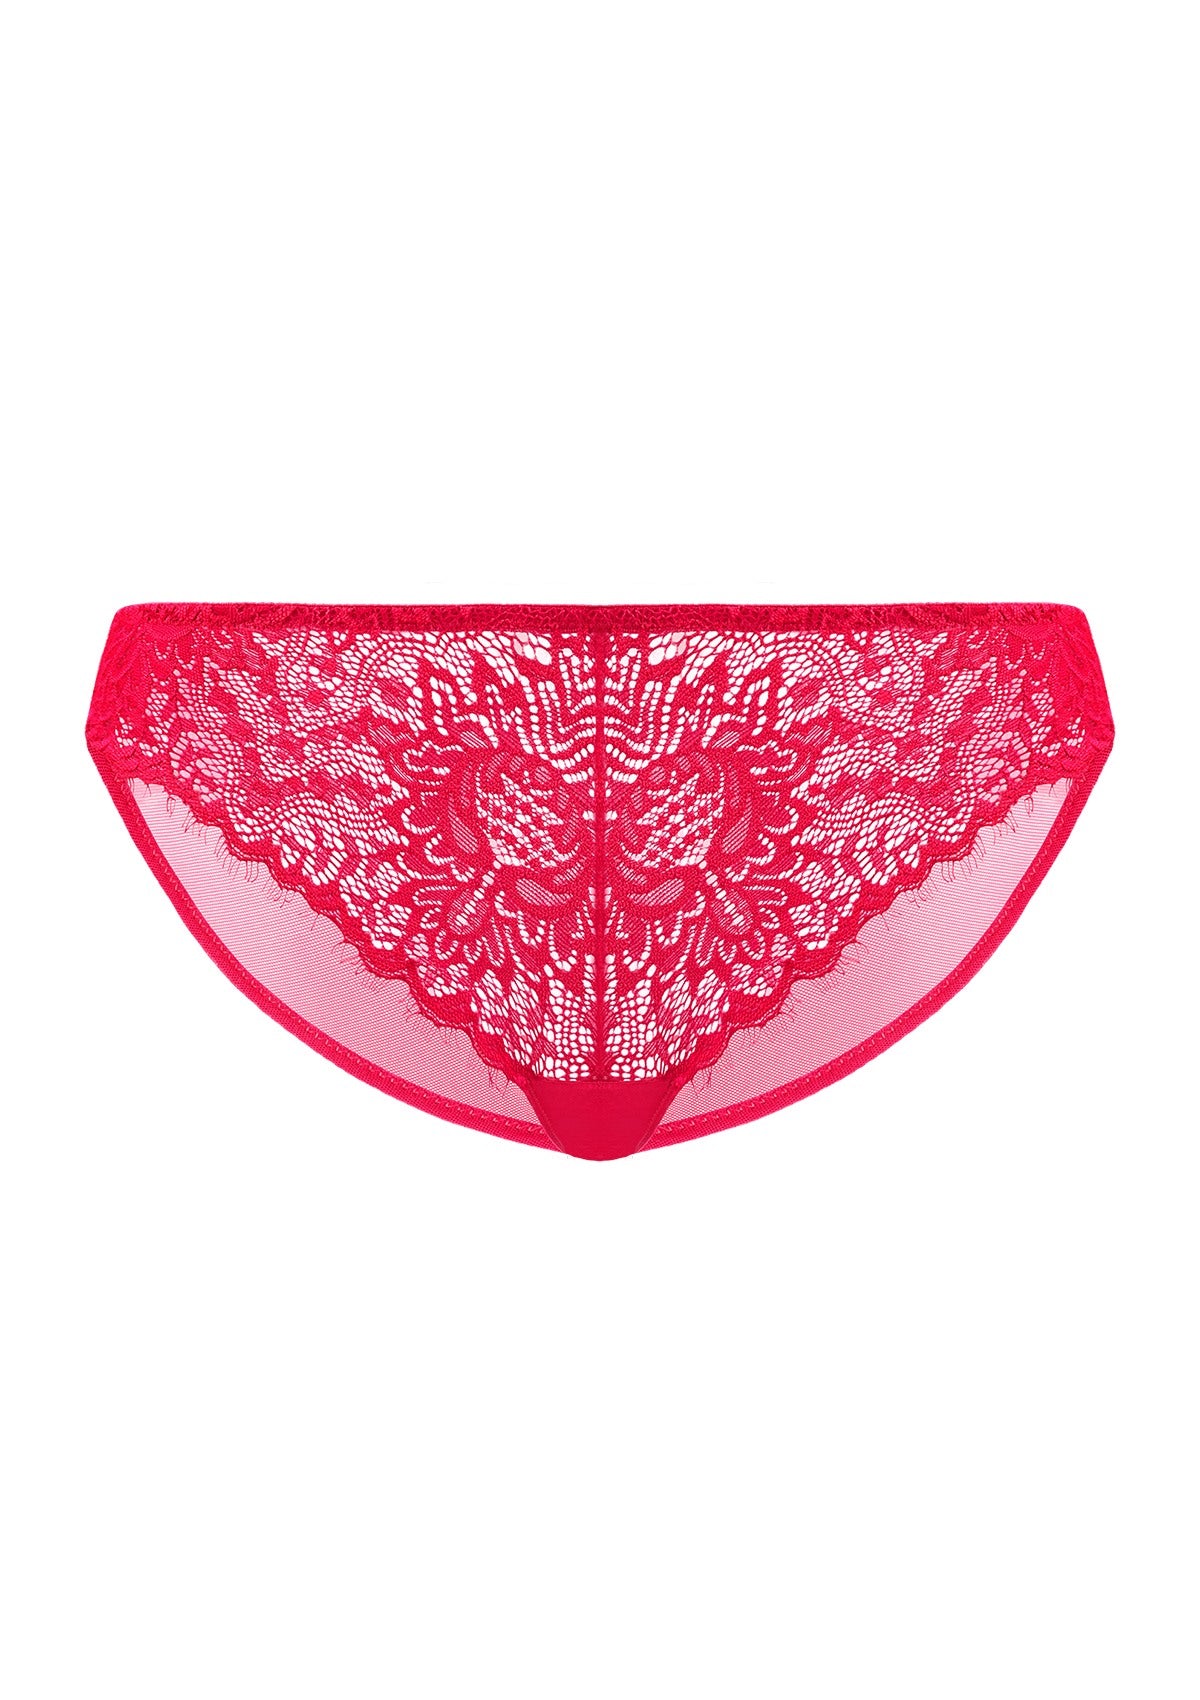 HSIA Sunflower Exquisite Raspberry Lace Bikini Underwear - M / Raspberry